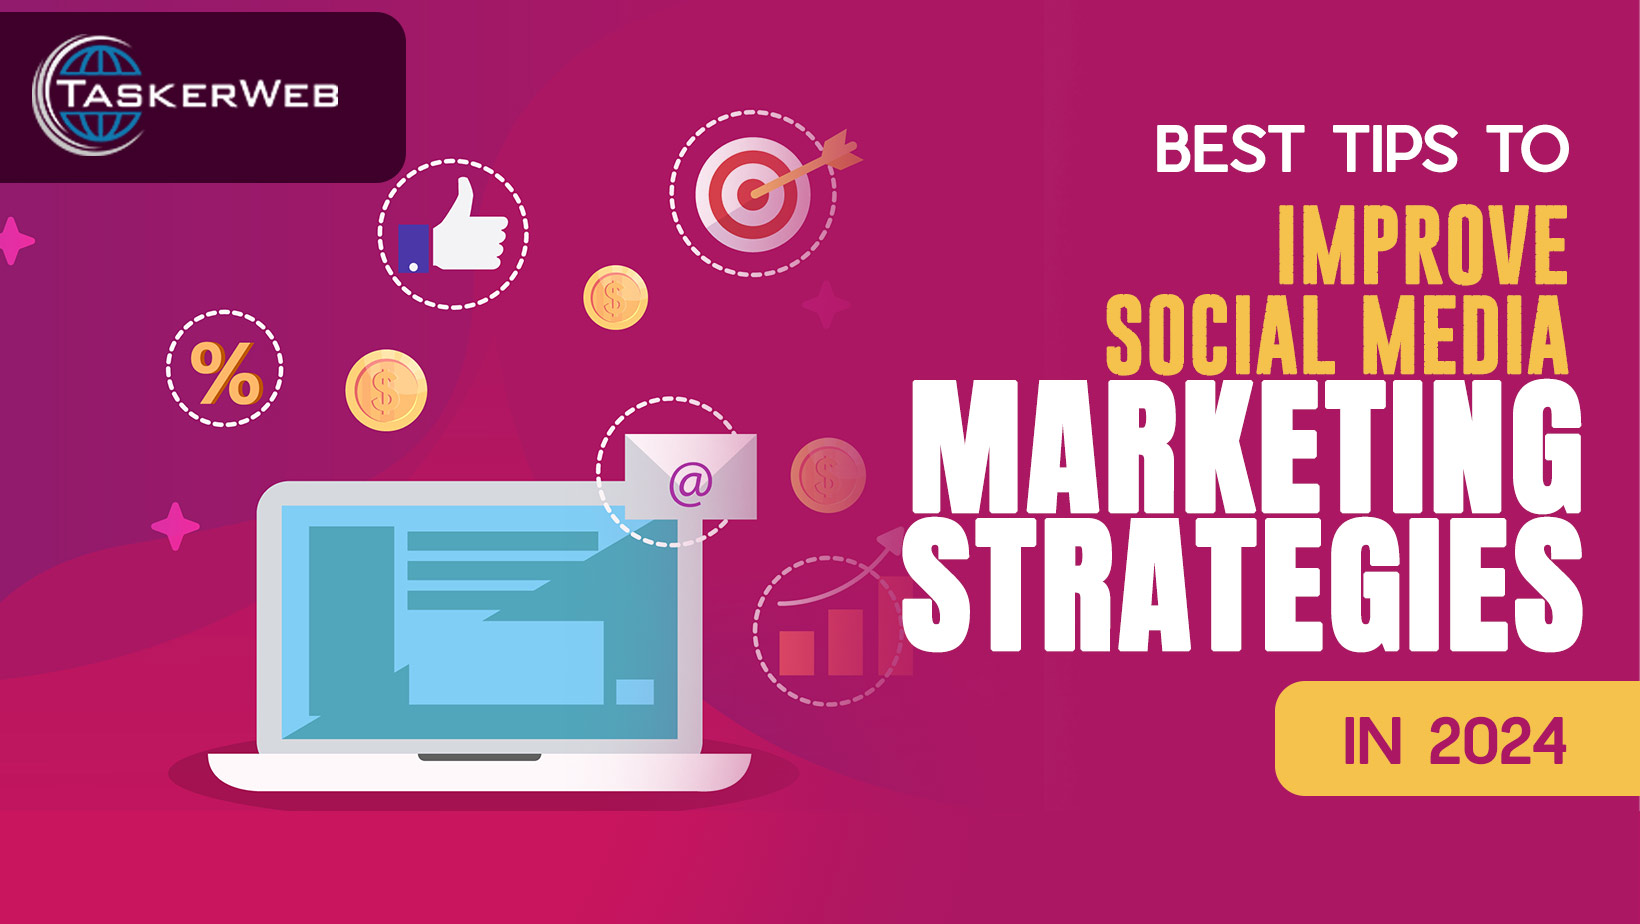 Best Tips To Improve Social Media Marketing Strategies in 2024